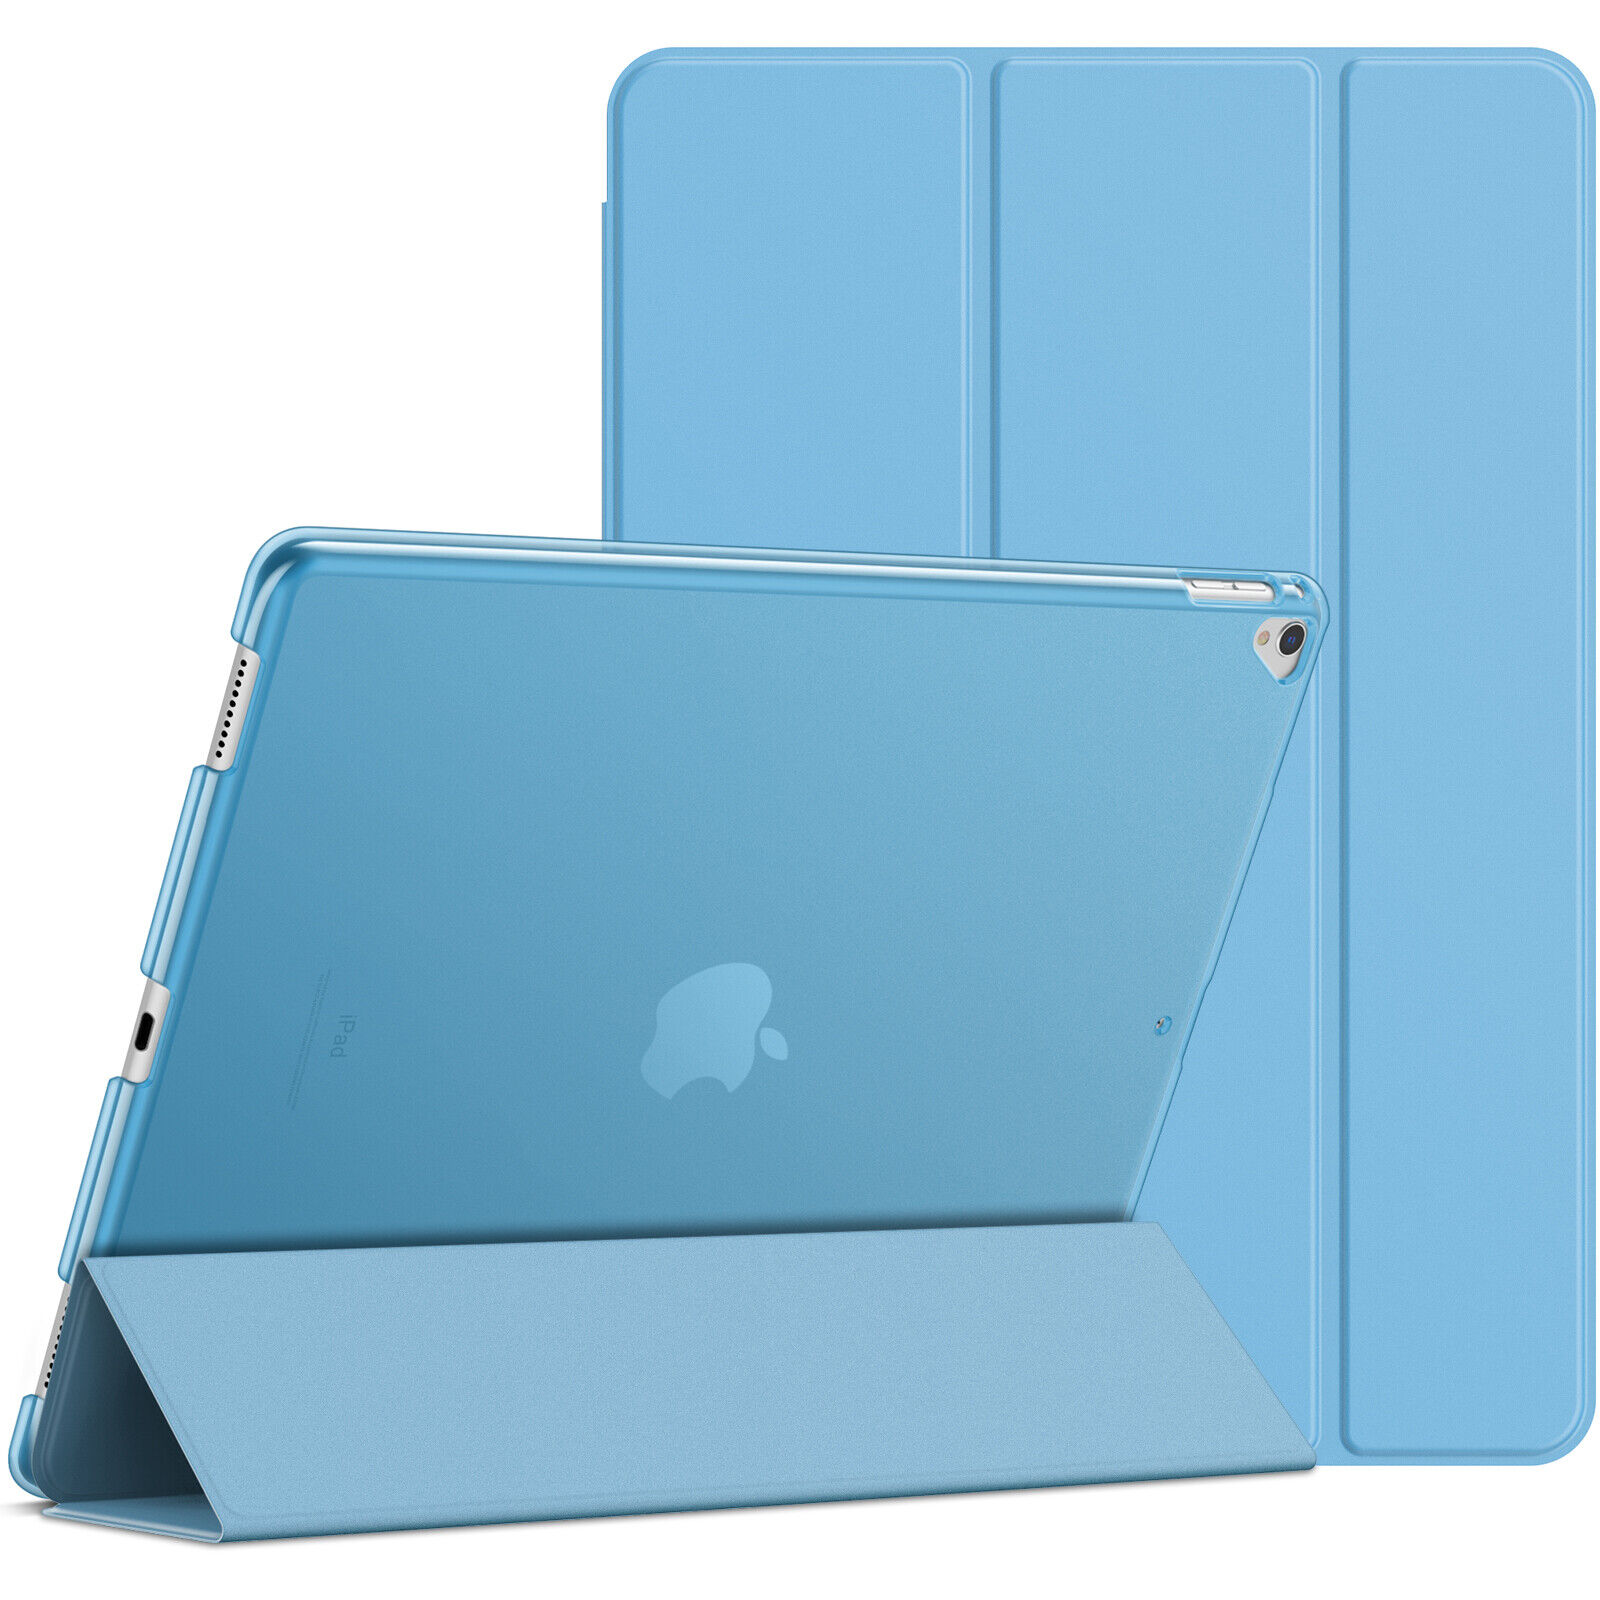 JETech Case for iPad Pro 12.9